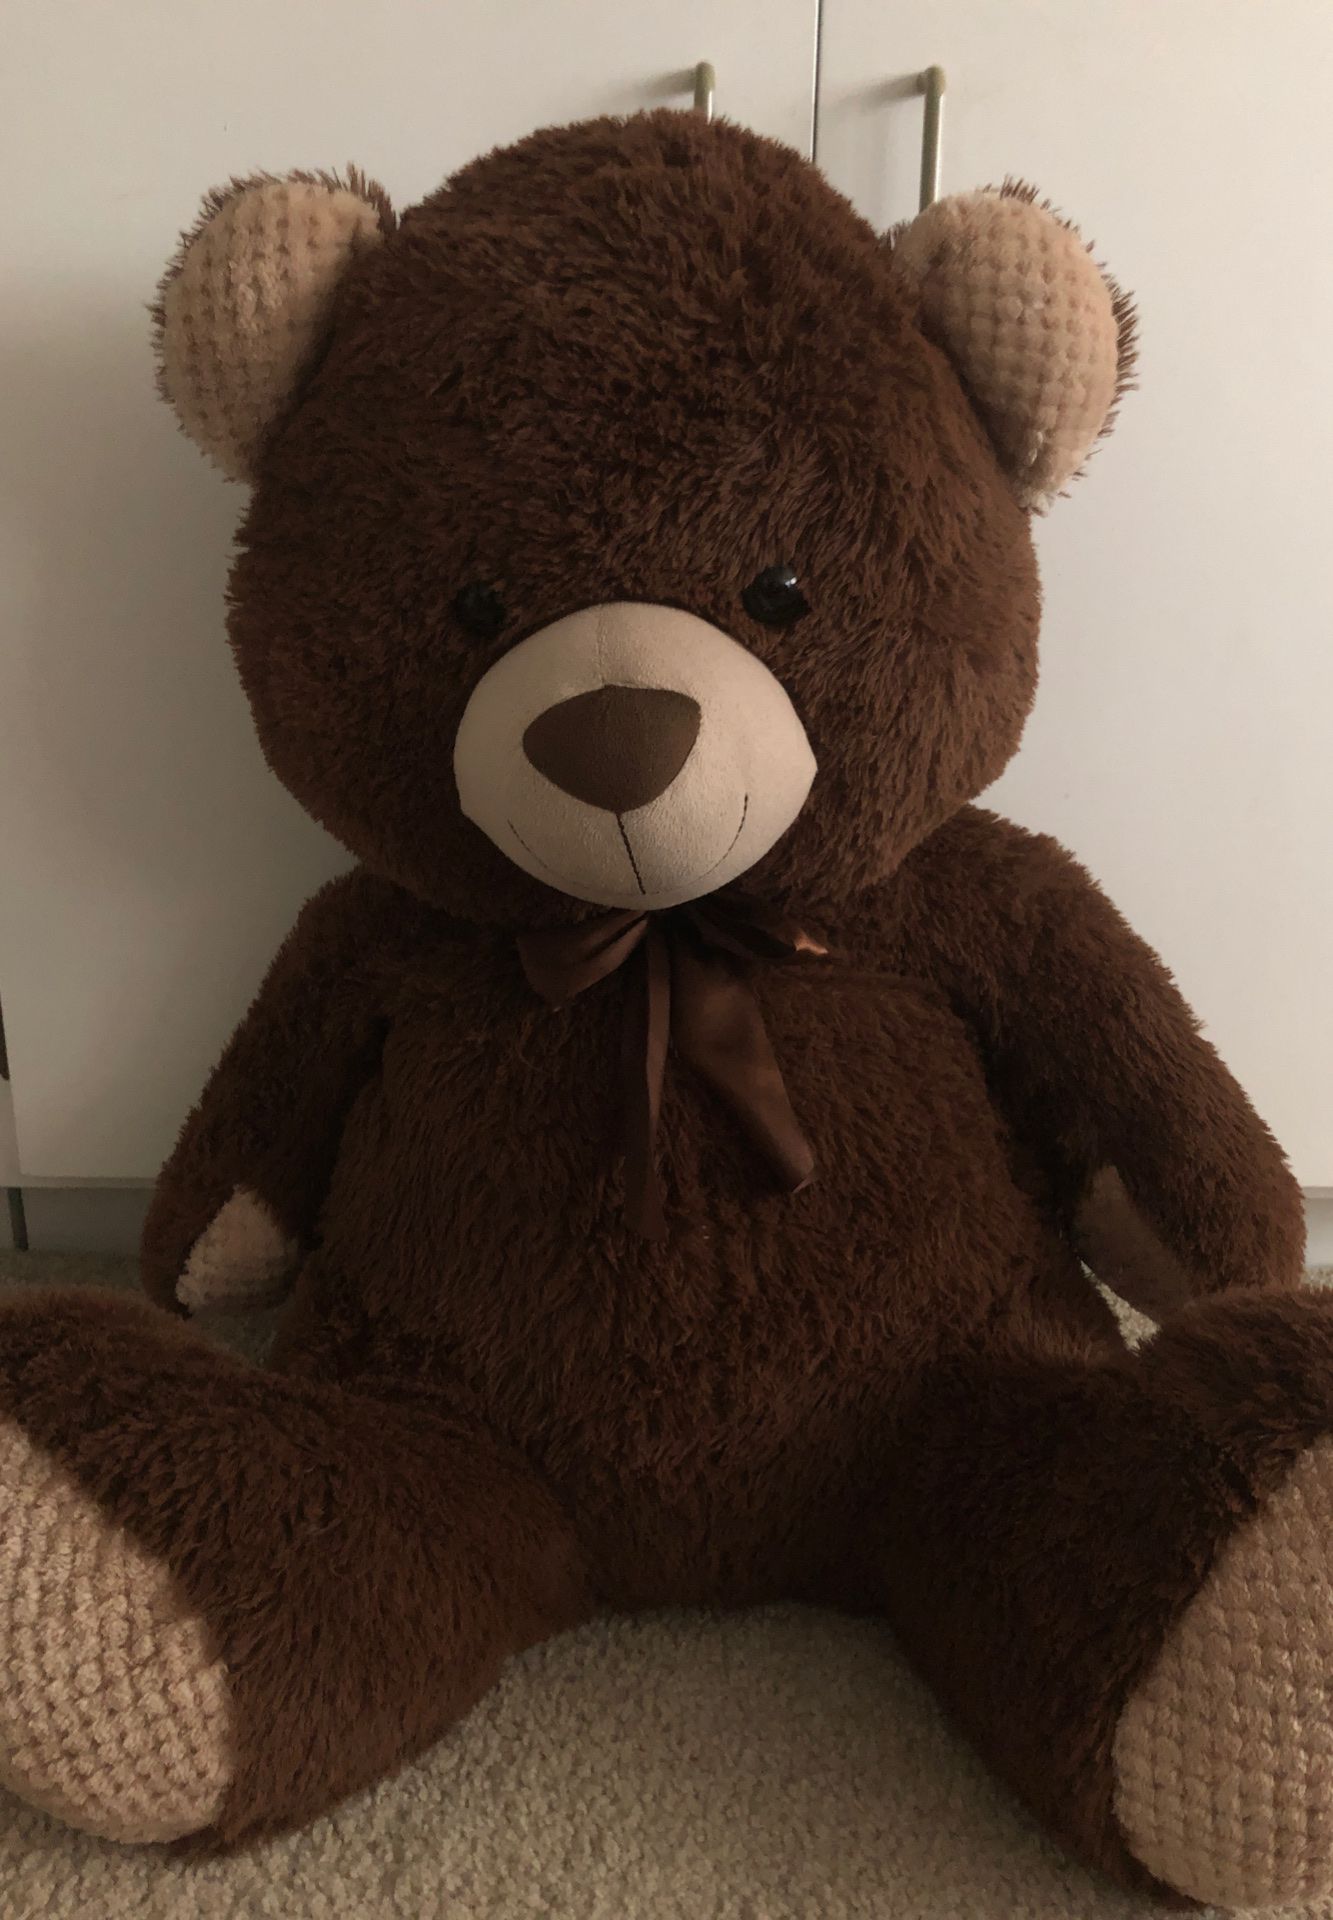 Big stuffed brown teddy bear